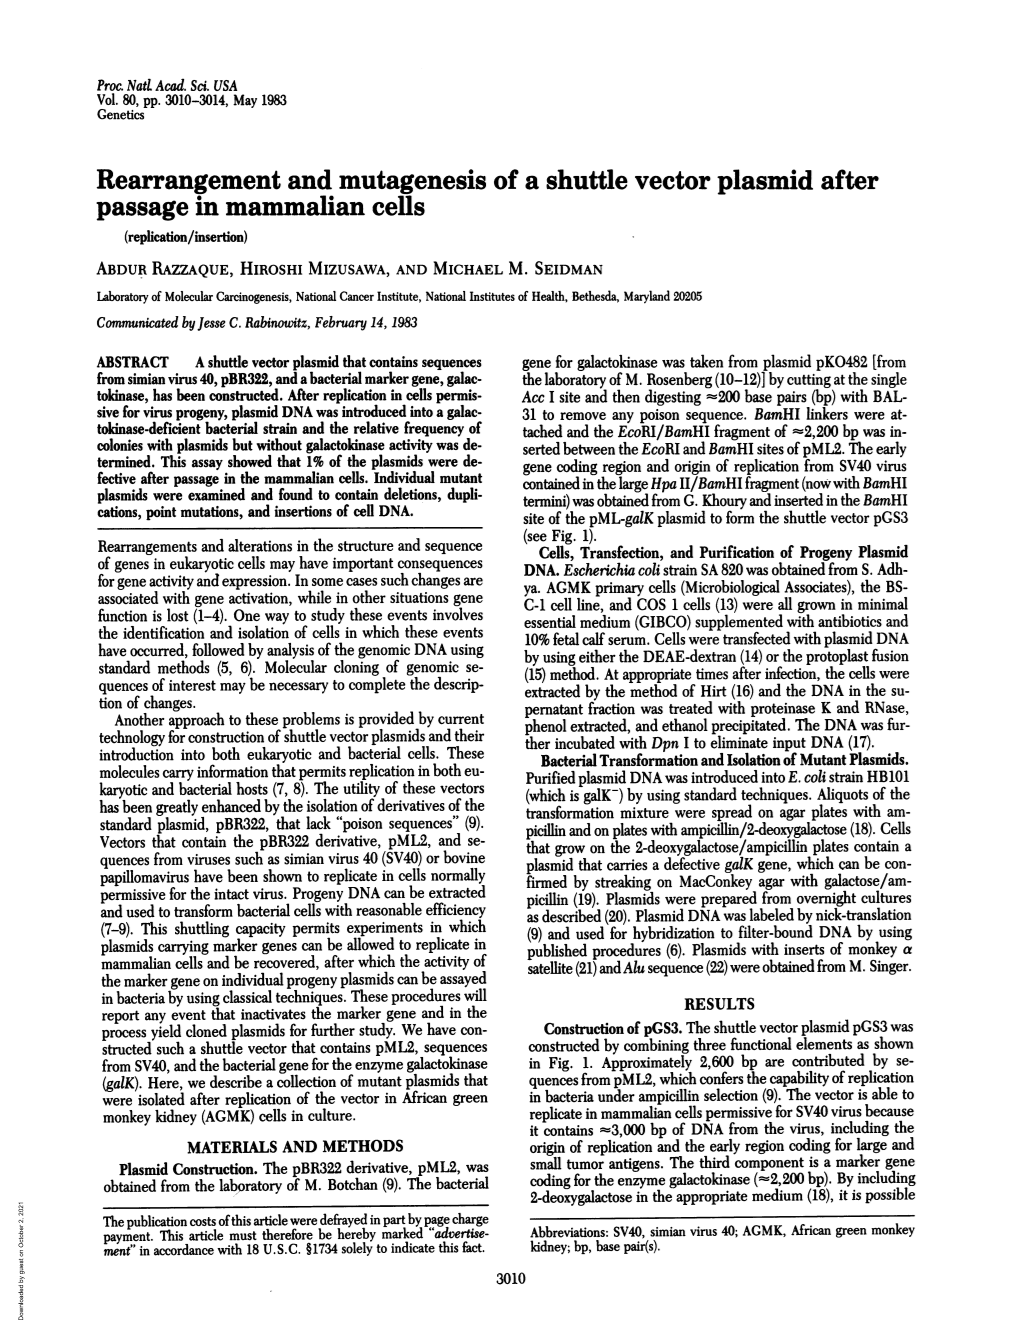 Passage in Mammalian Cells (Replication/Insertion) ABDUR RAZZAQUE, HIROSHI MIZUSAWA, and MICHAEL M